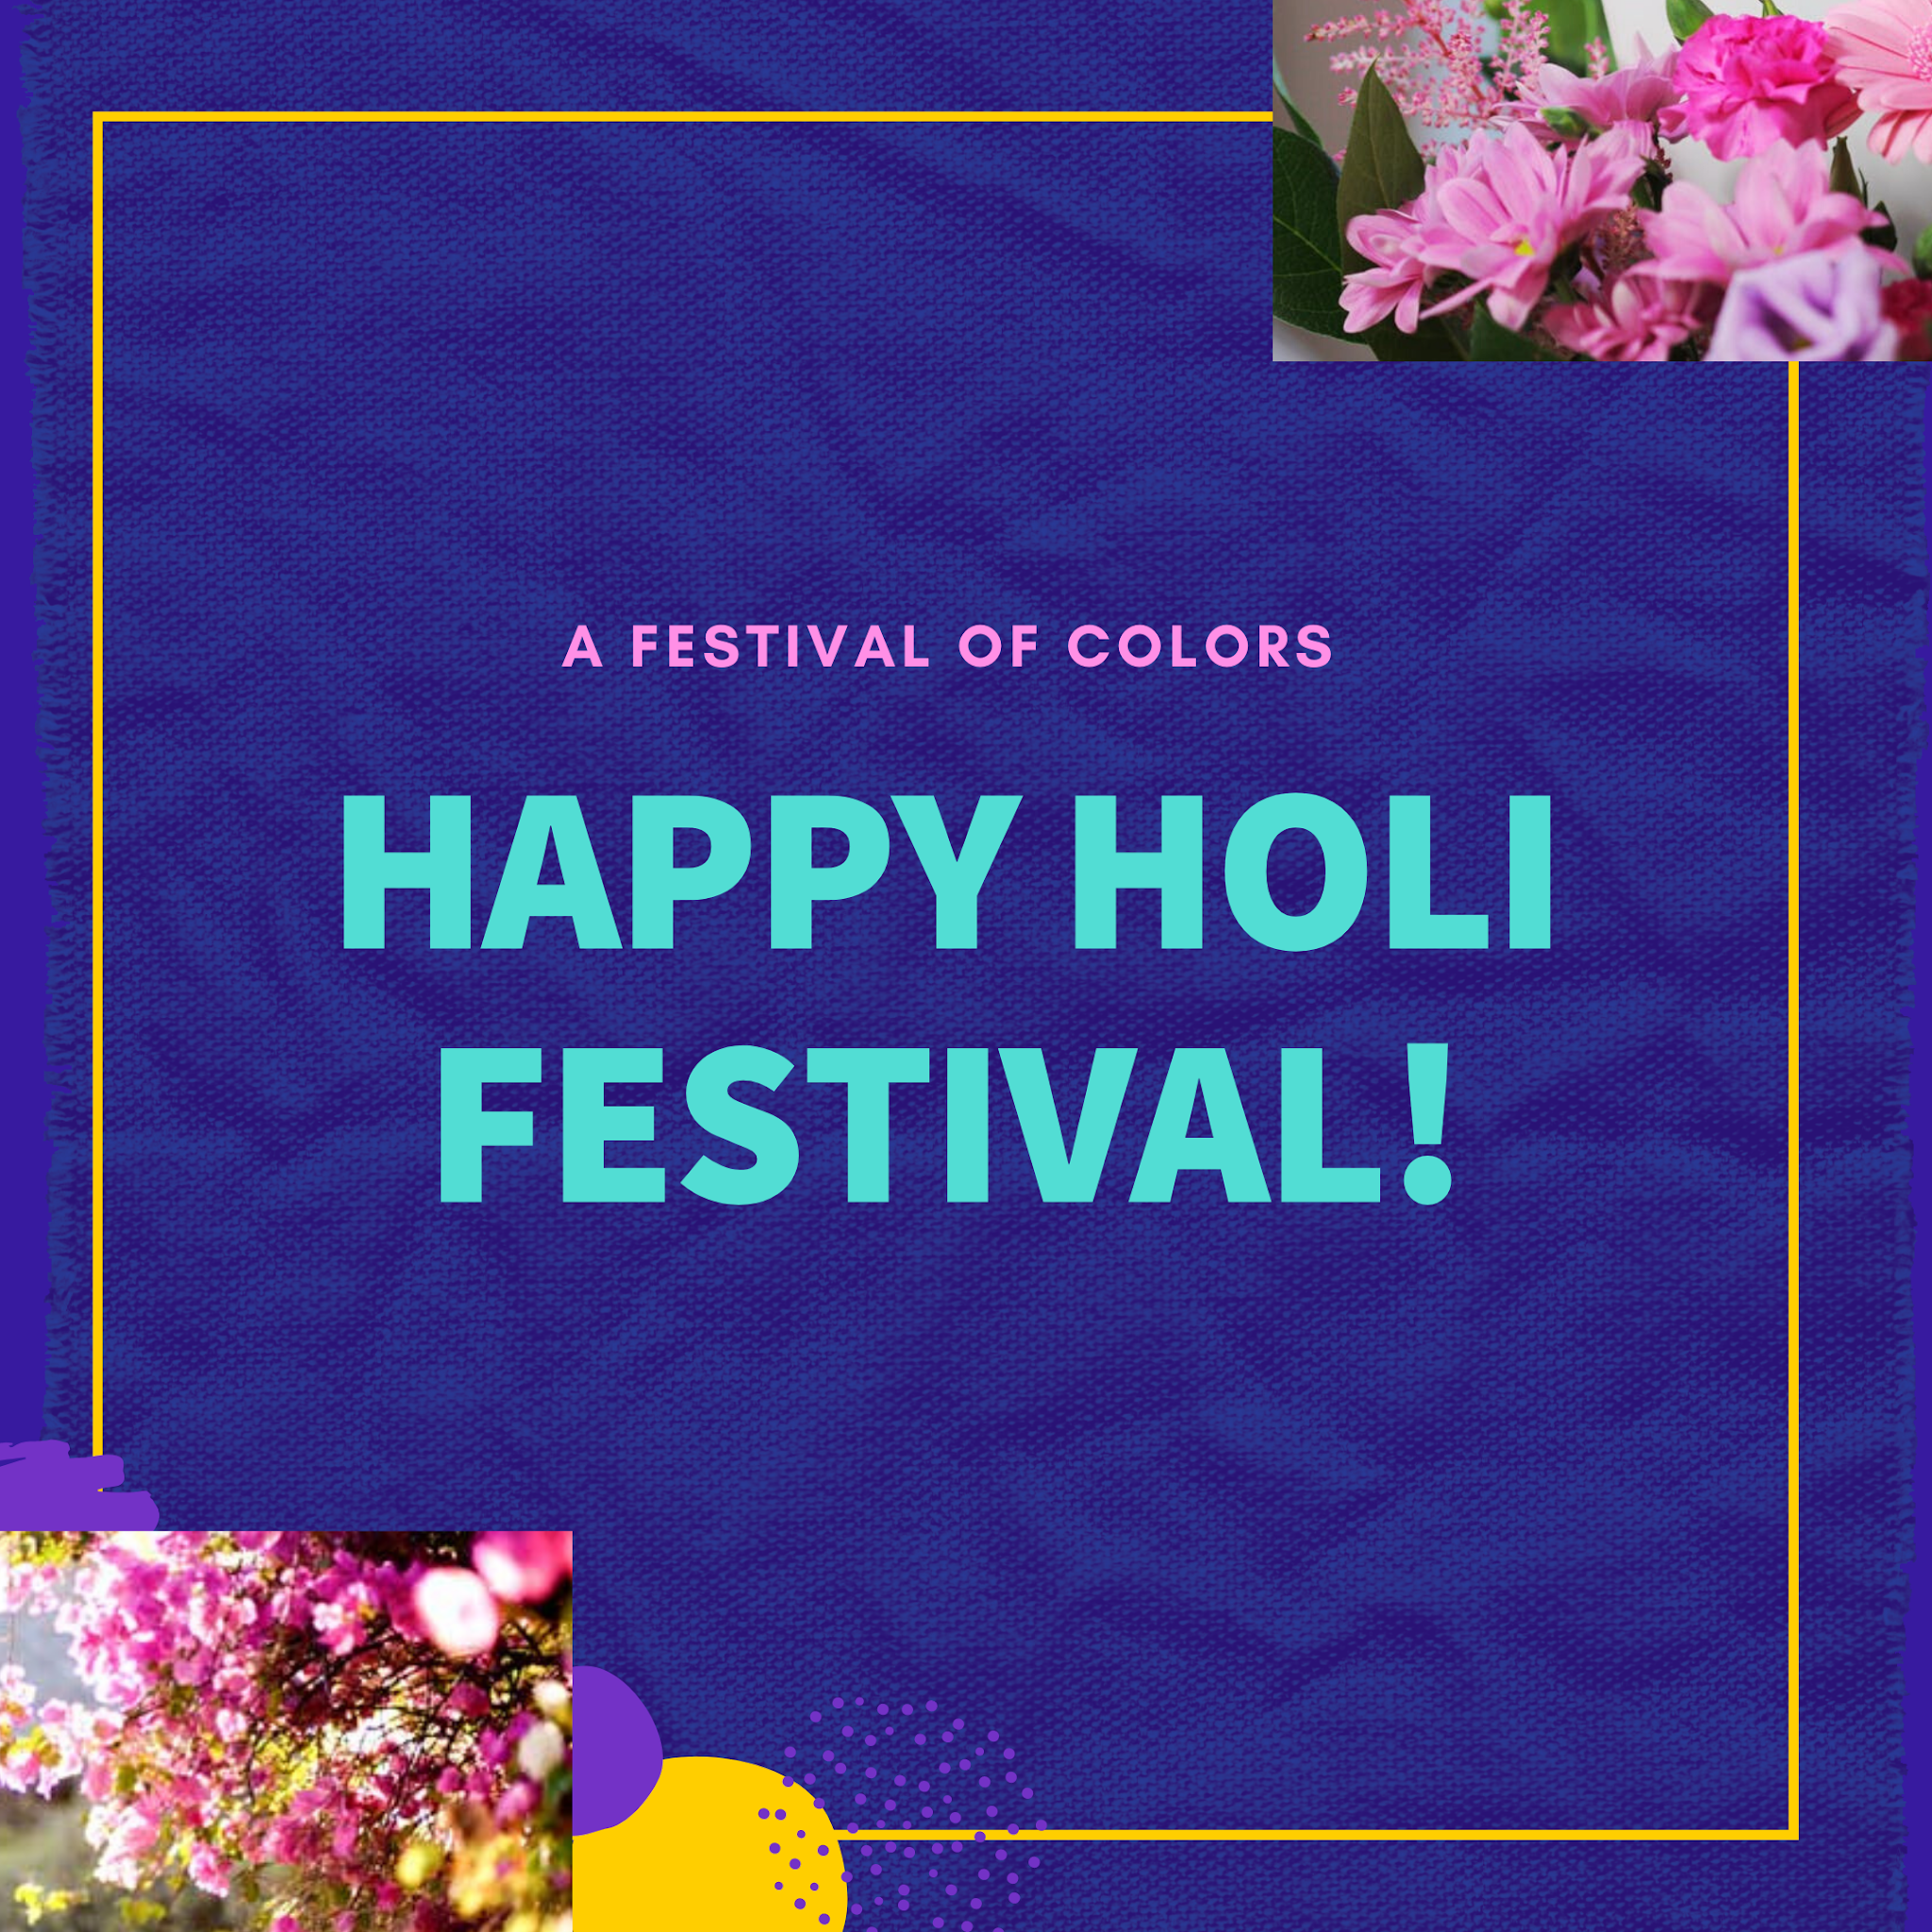 Happy holi status images, wishesBest Beautiful Happy Holi Wishes In English, Status, Quotes, SMS, Massage, Images